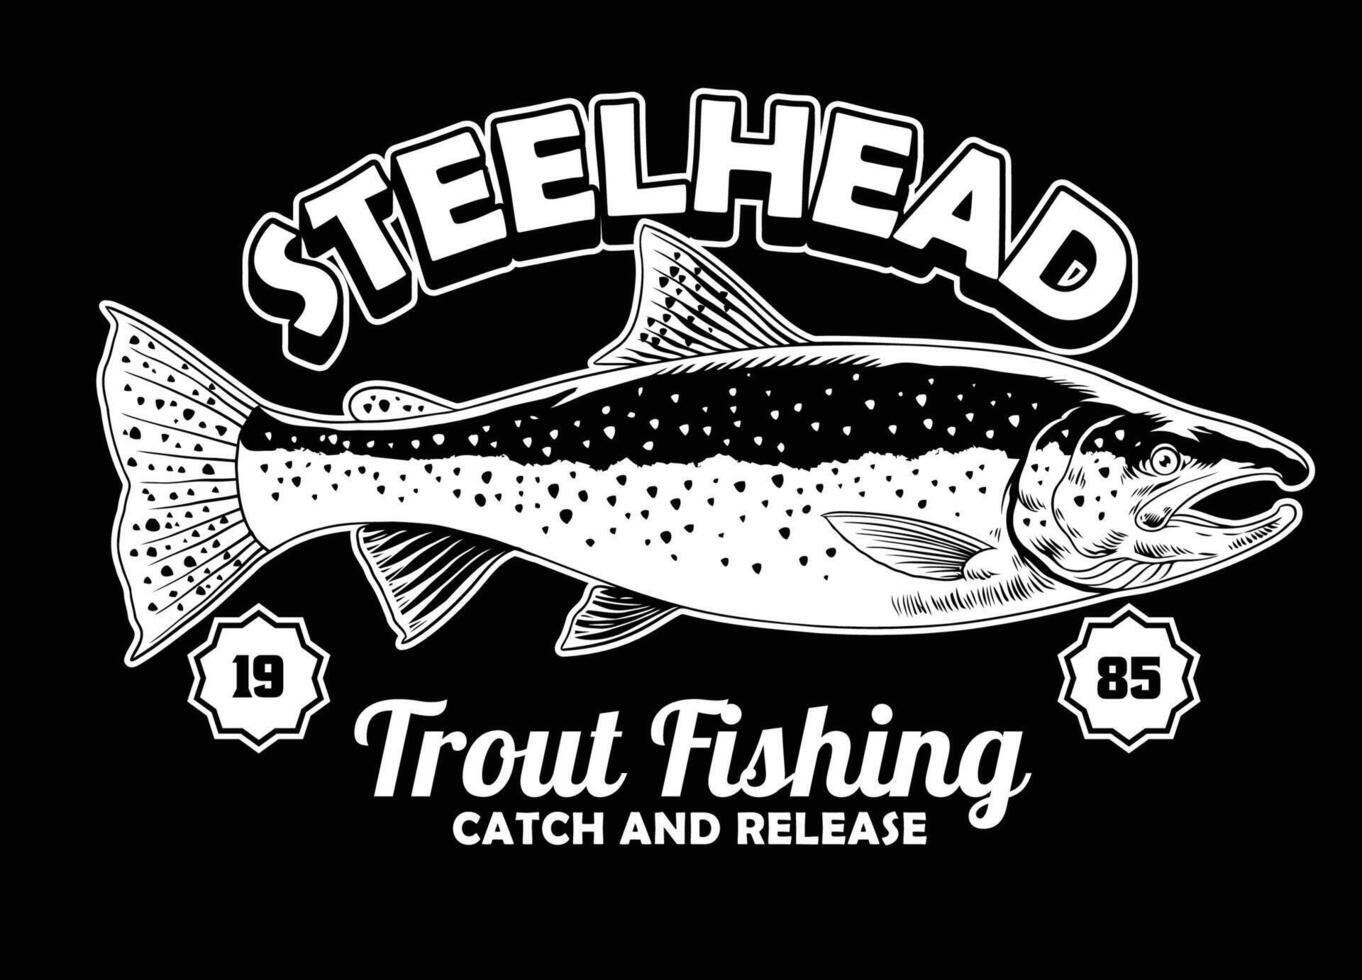 steelhead forel visvangst overhemd ontwerp illustratie vector